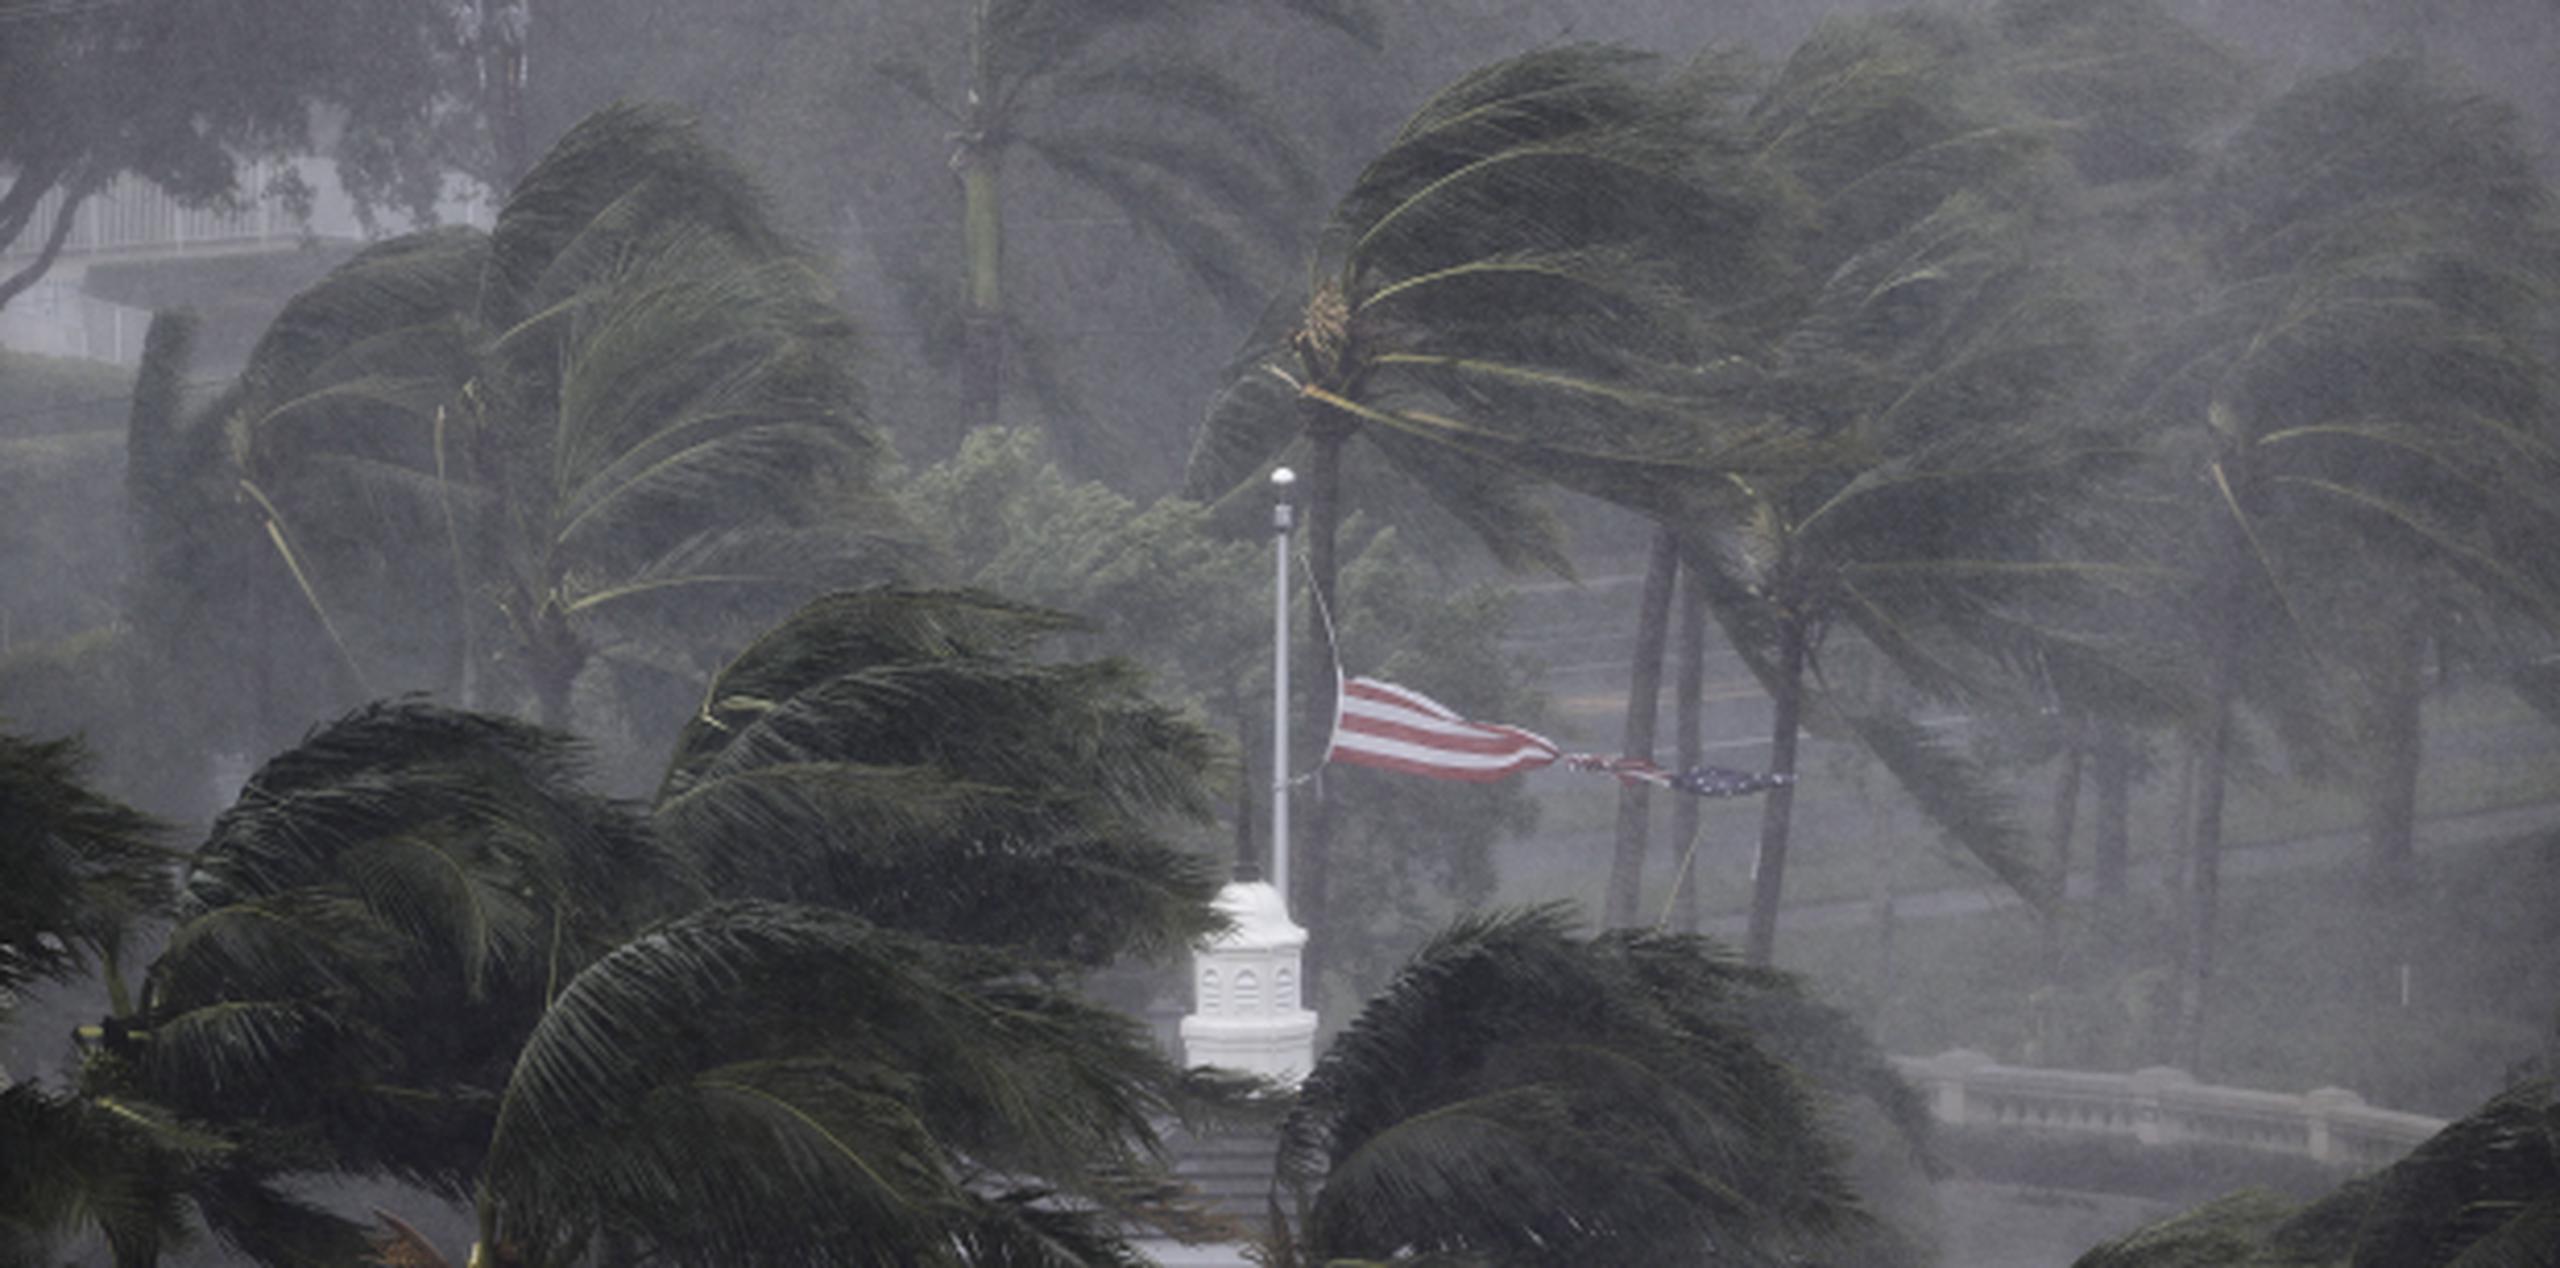 El huracán Irma llegó el domingo en la mañana a Florida como una poderosa tormenta de categoría 4. (AP)